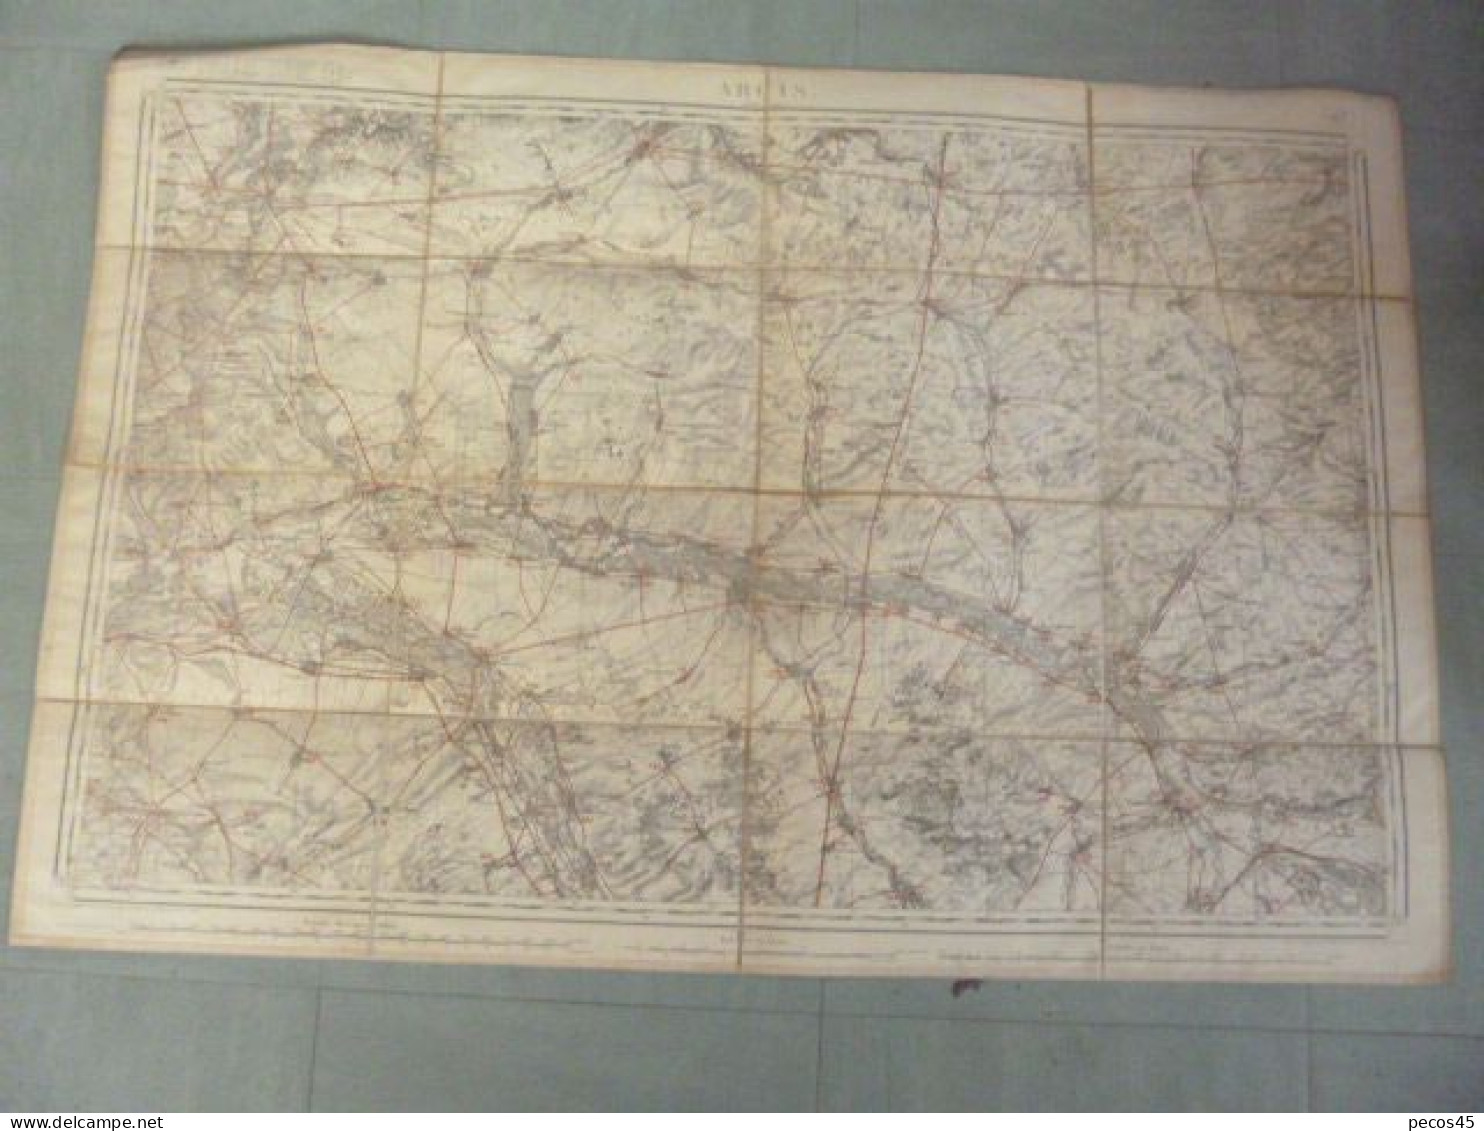 ARCIS S/Aube (10) - 1/80 000ème - 1835. - Topographical Maps